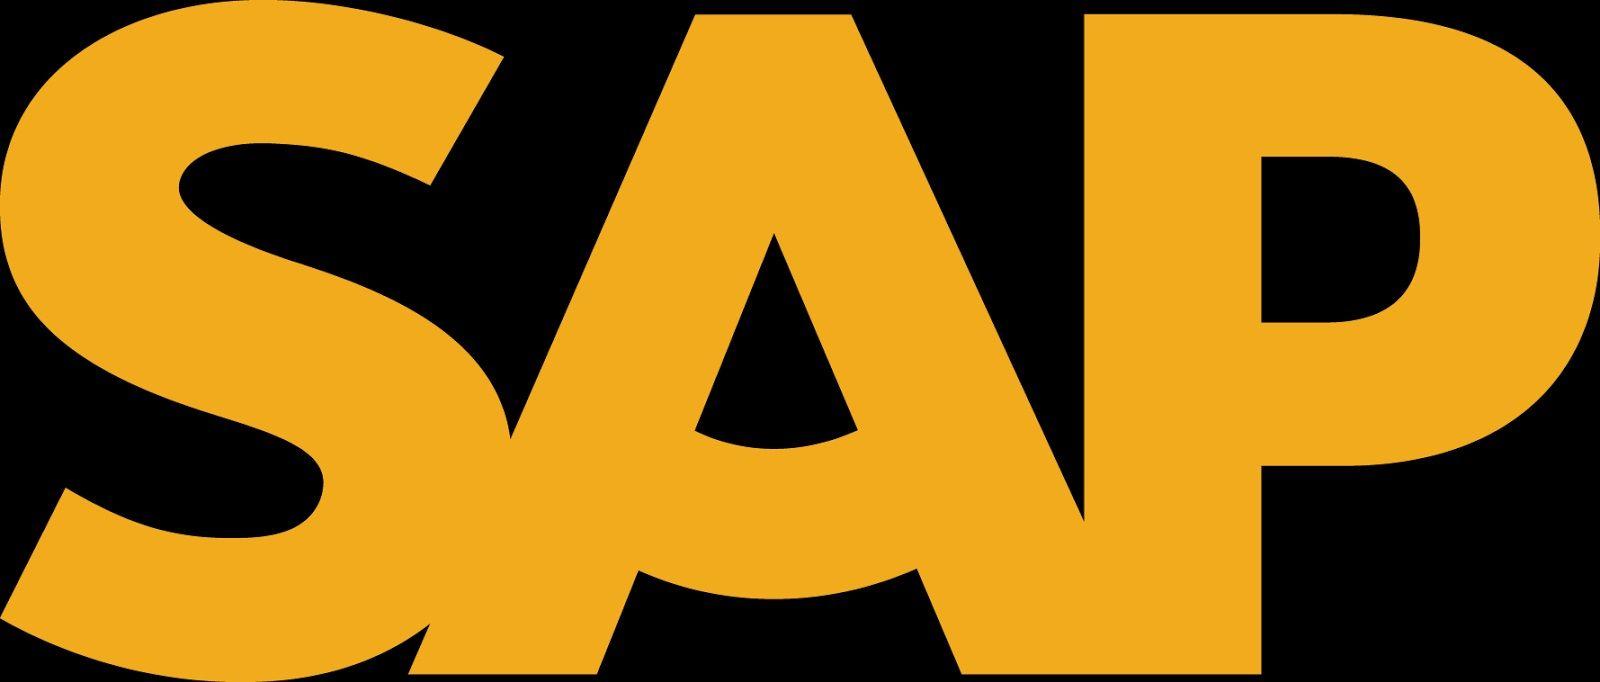 New SAP Logo - SAP Has Released New Logo